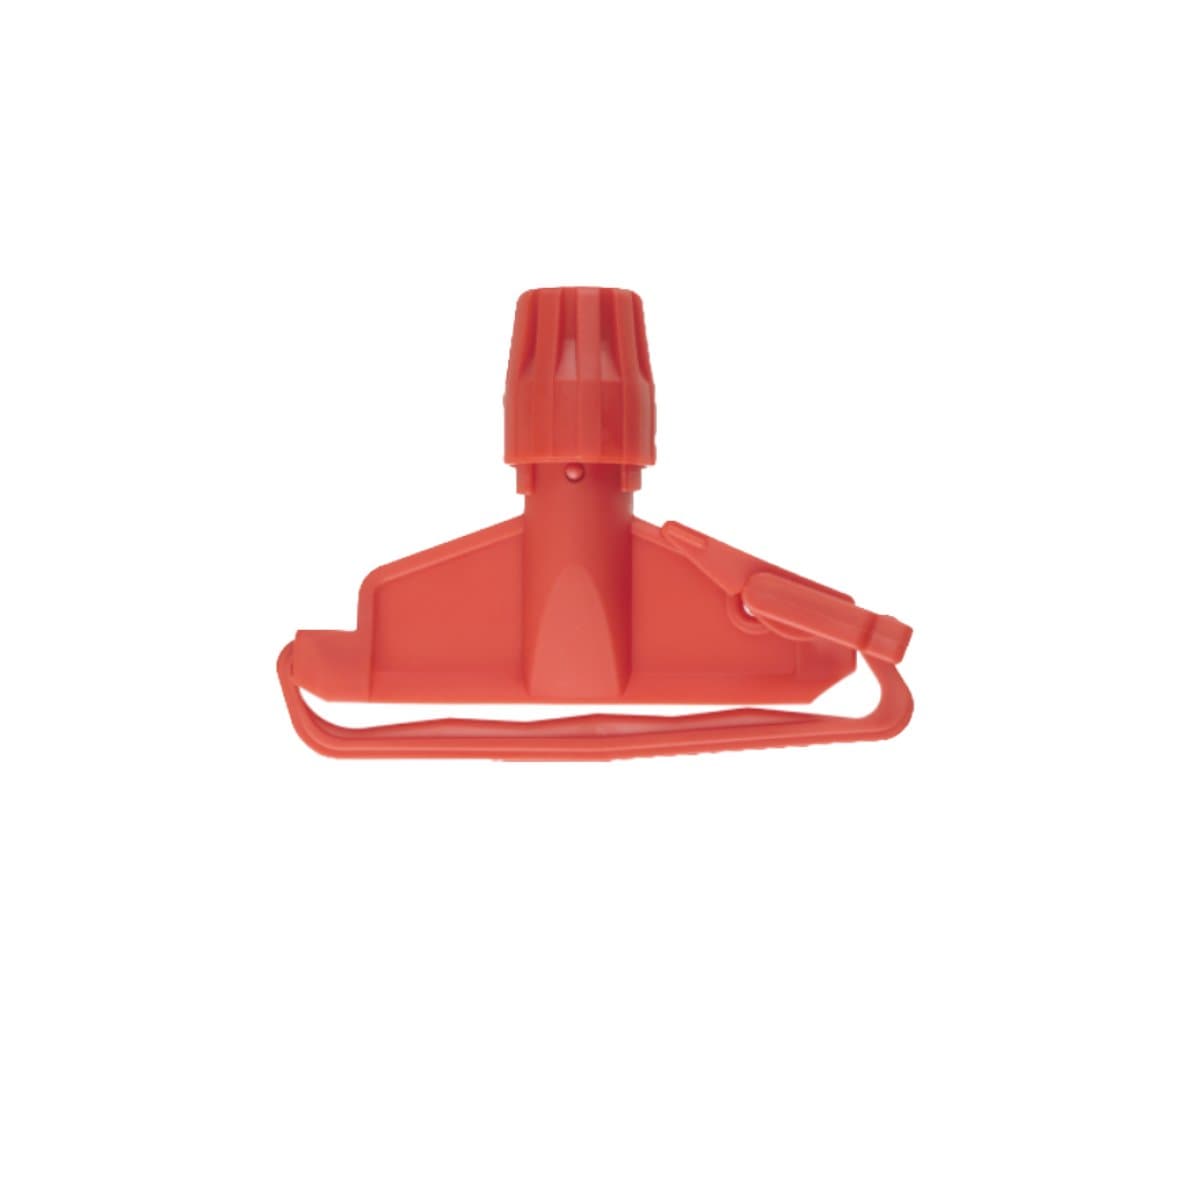 ECOMOP Plastic Mop Handle, Assorted Colors